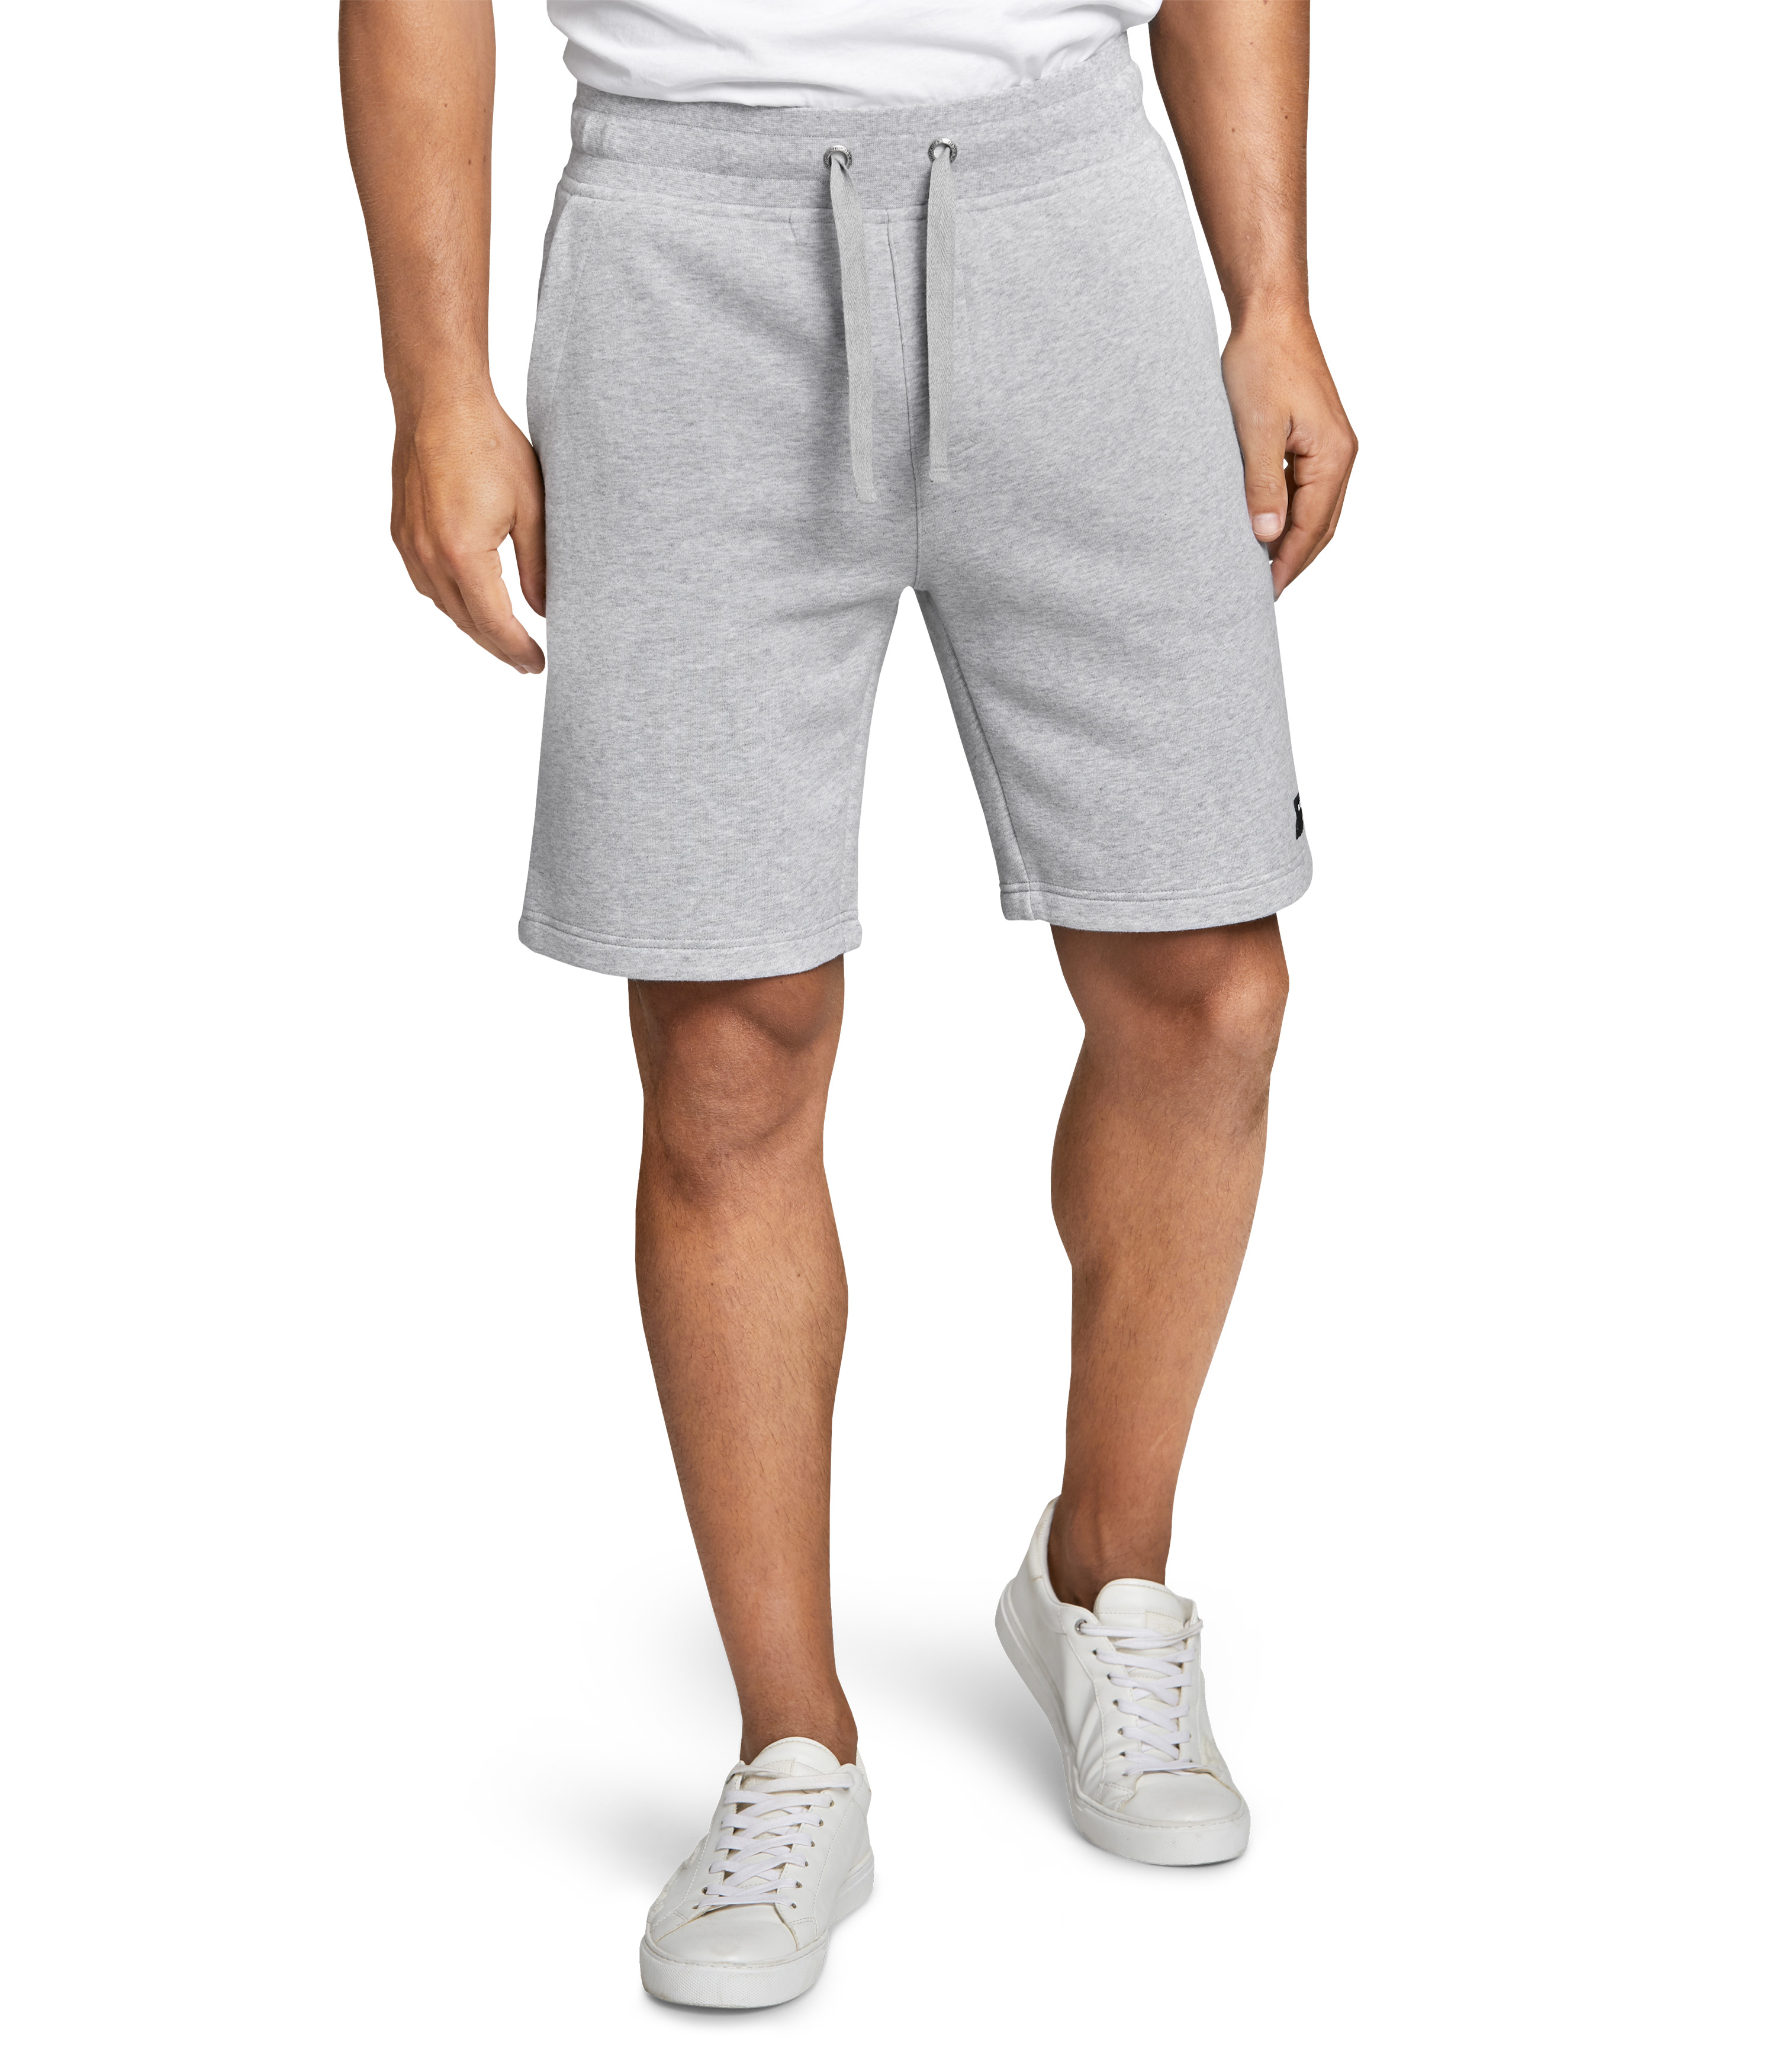  Centre Shorts, Light Grey Melange, M